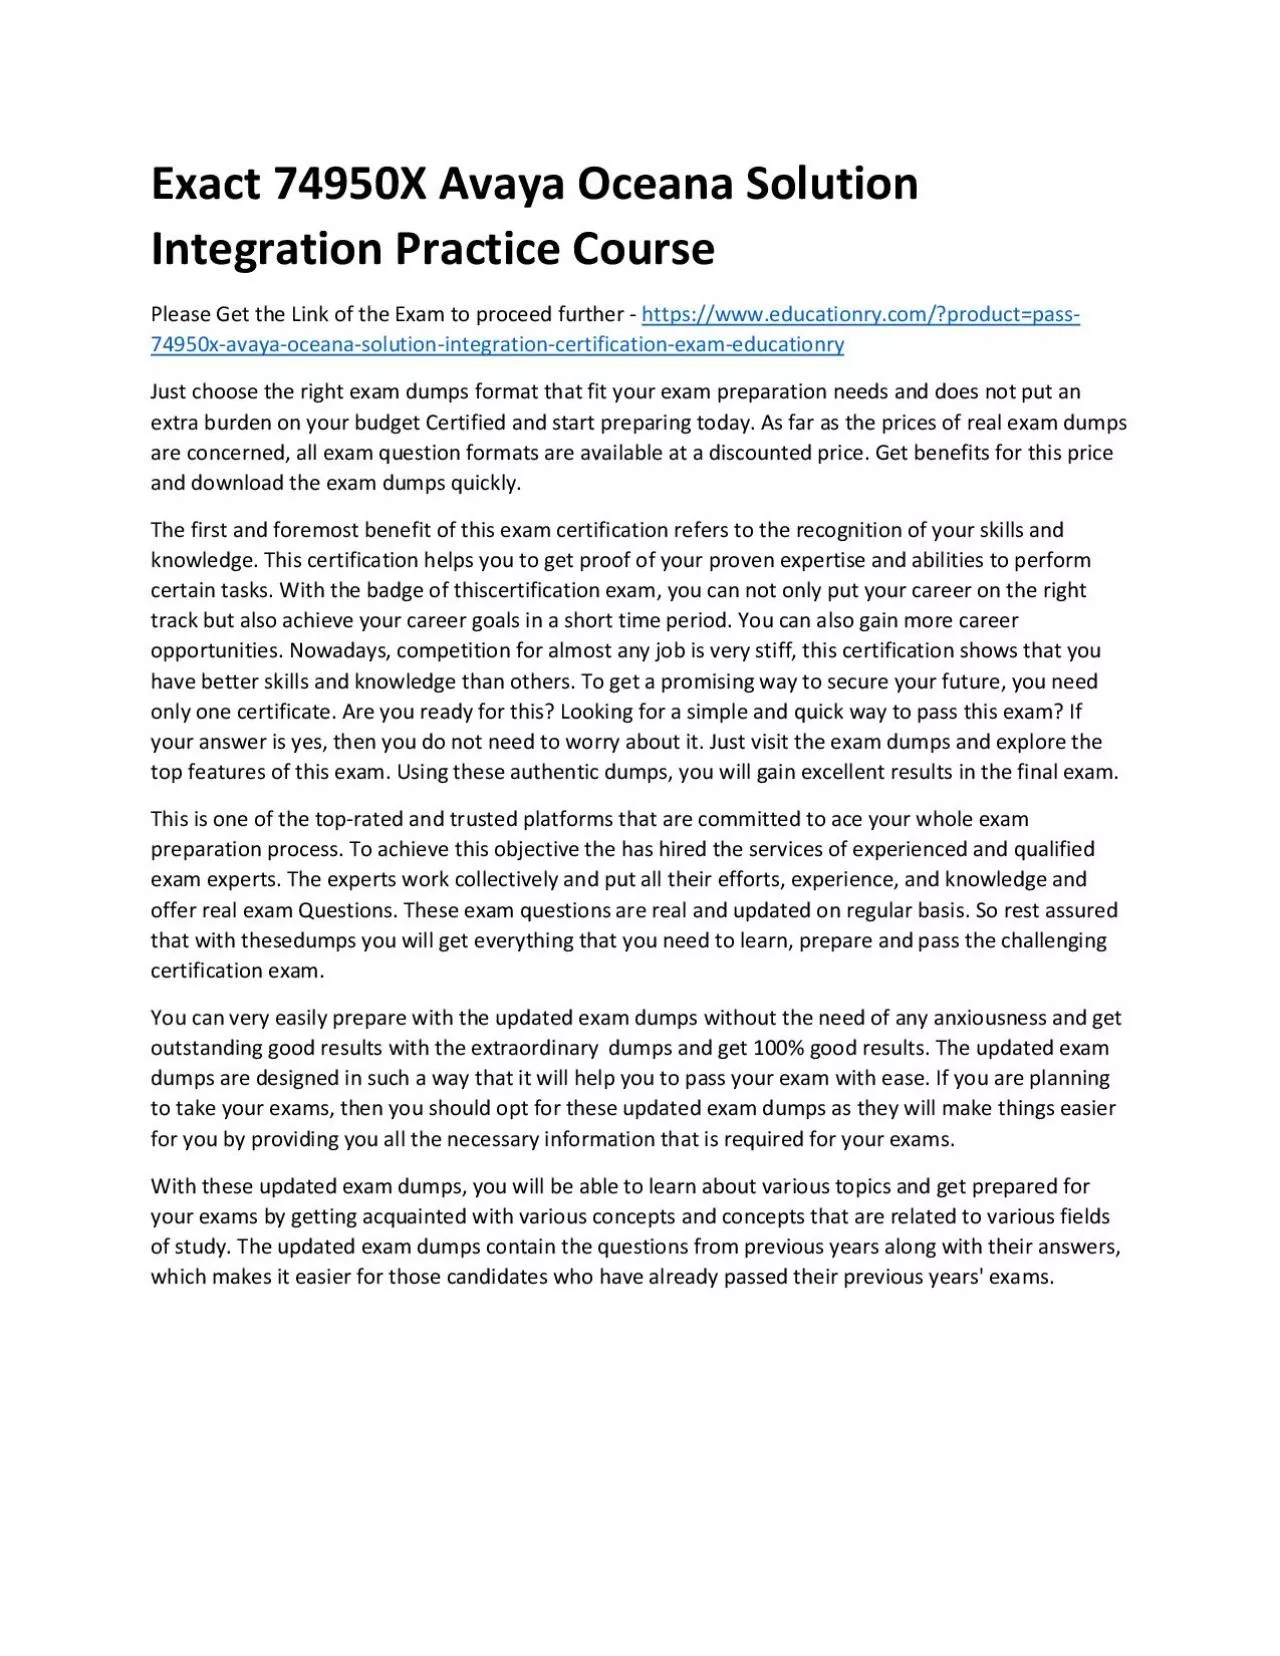 Exact 74950X Avaya Oceana Solution Integration Practice Course